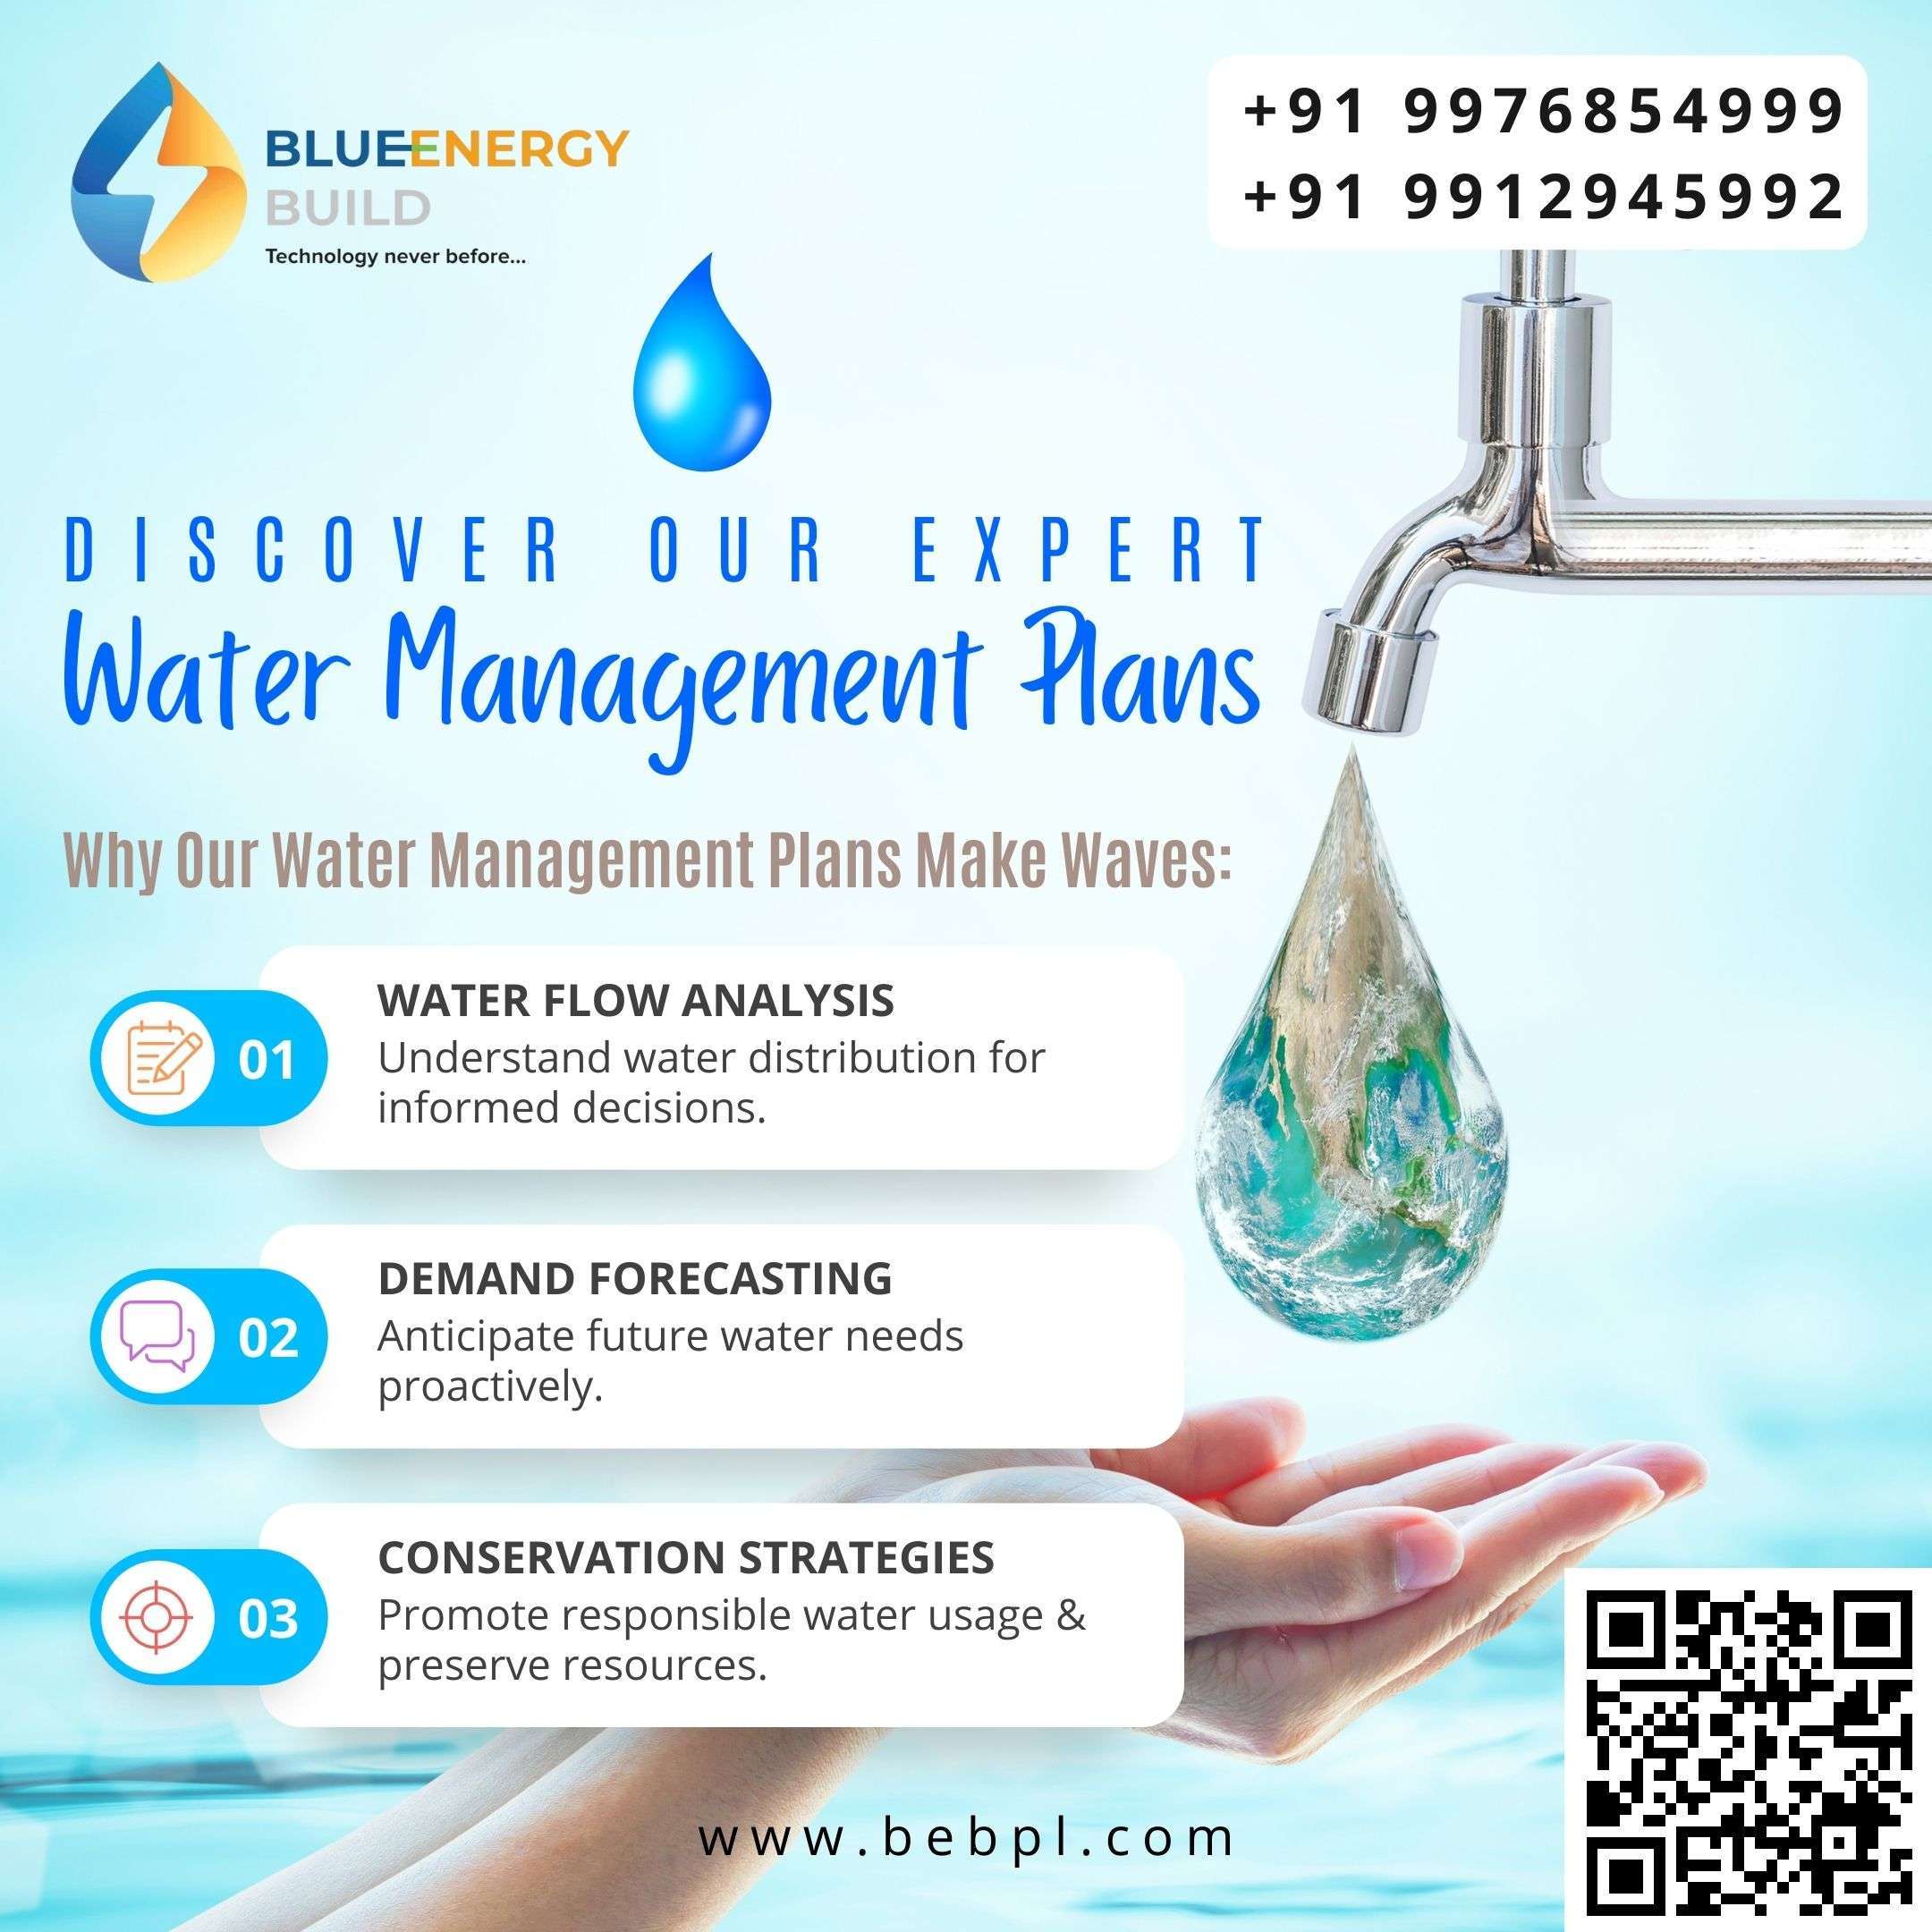 BlueEnergy Build Water Management Plans